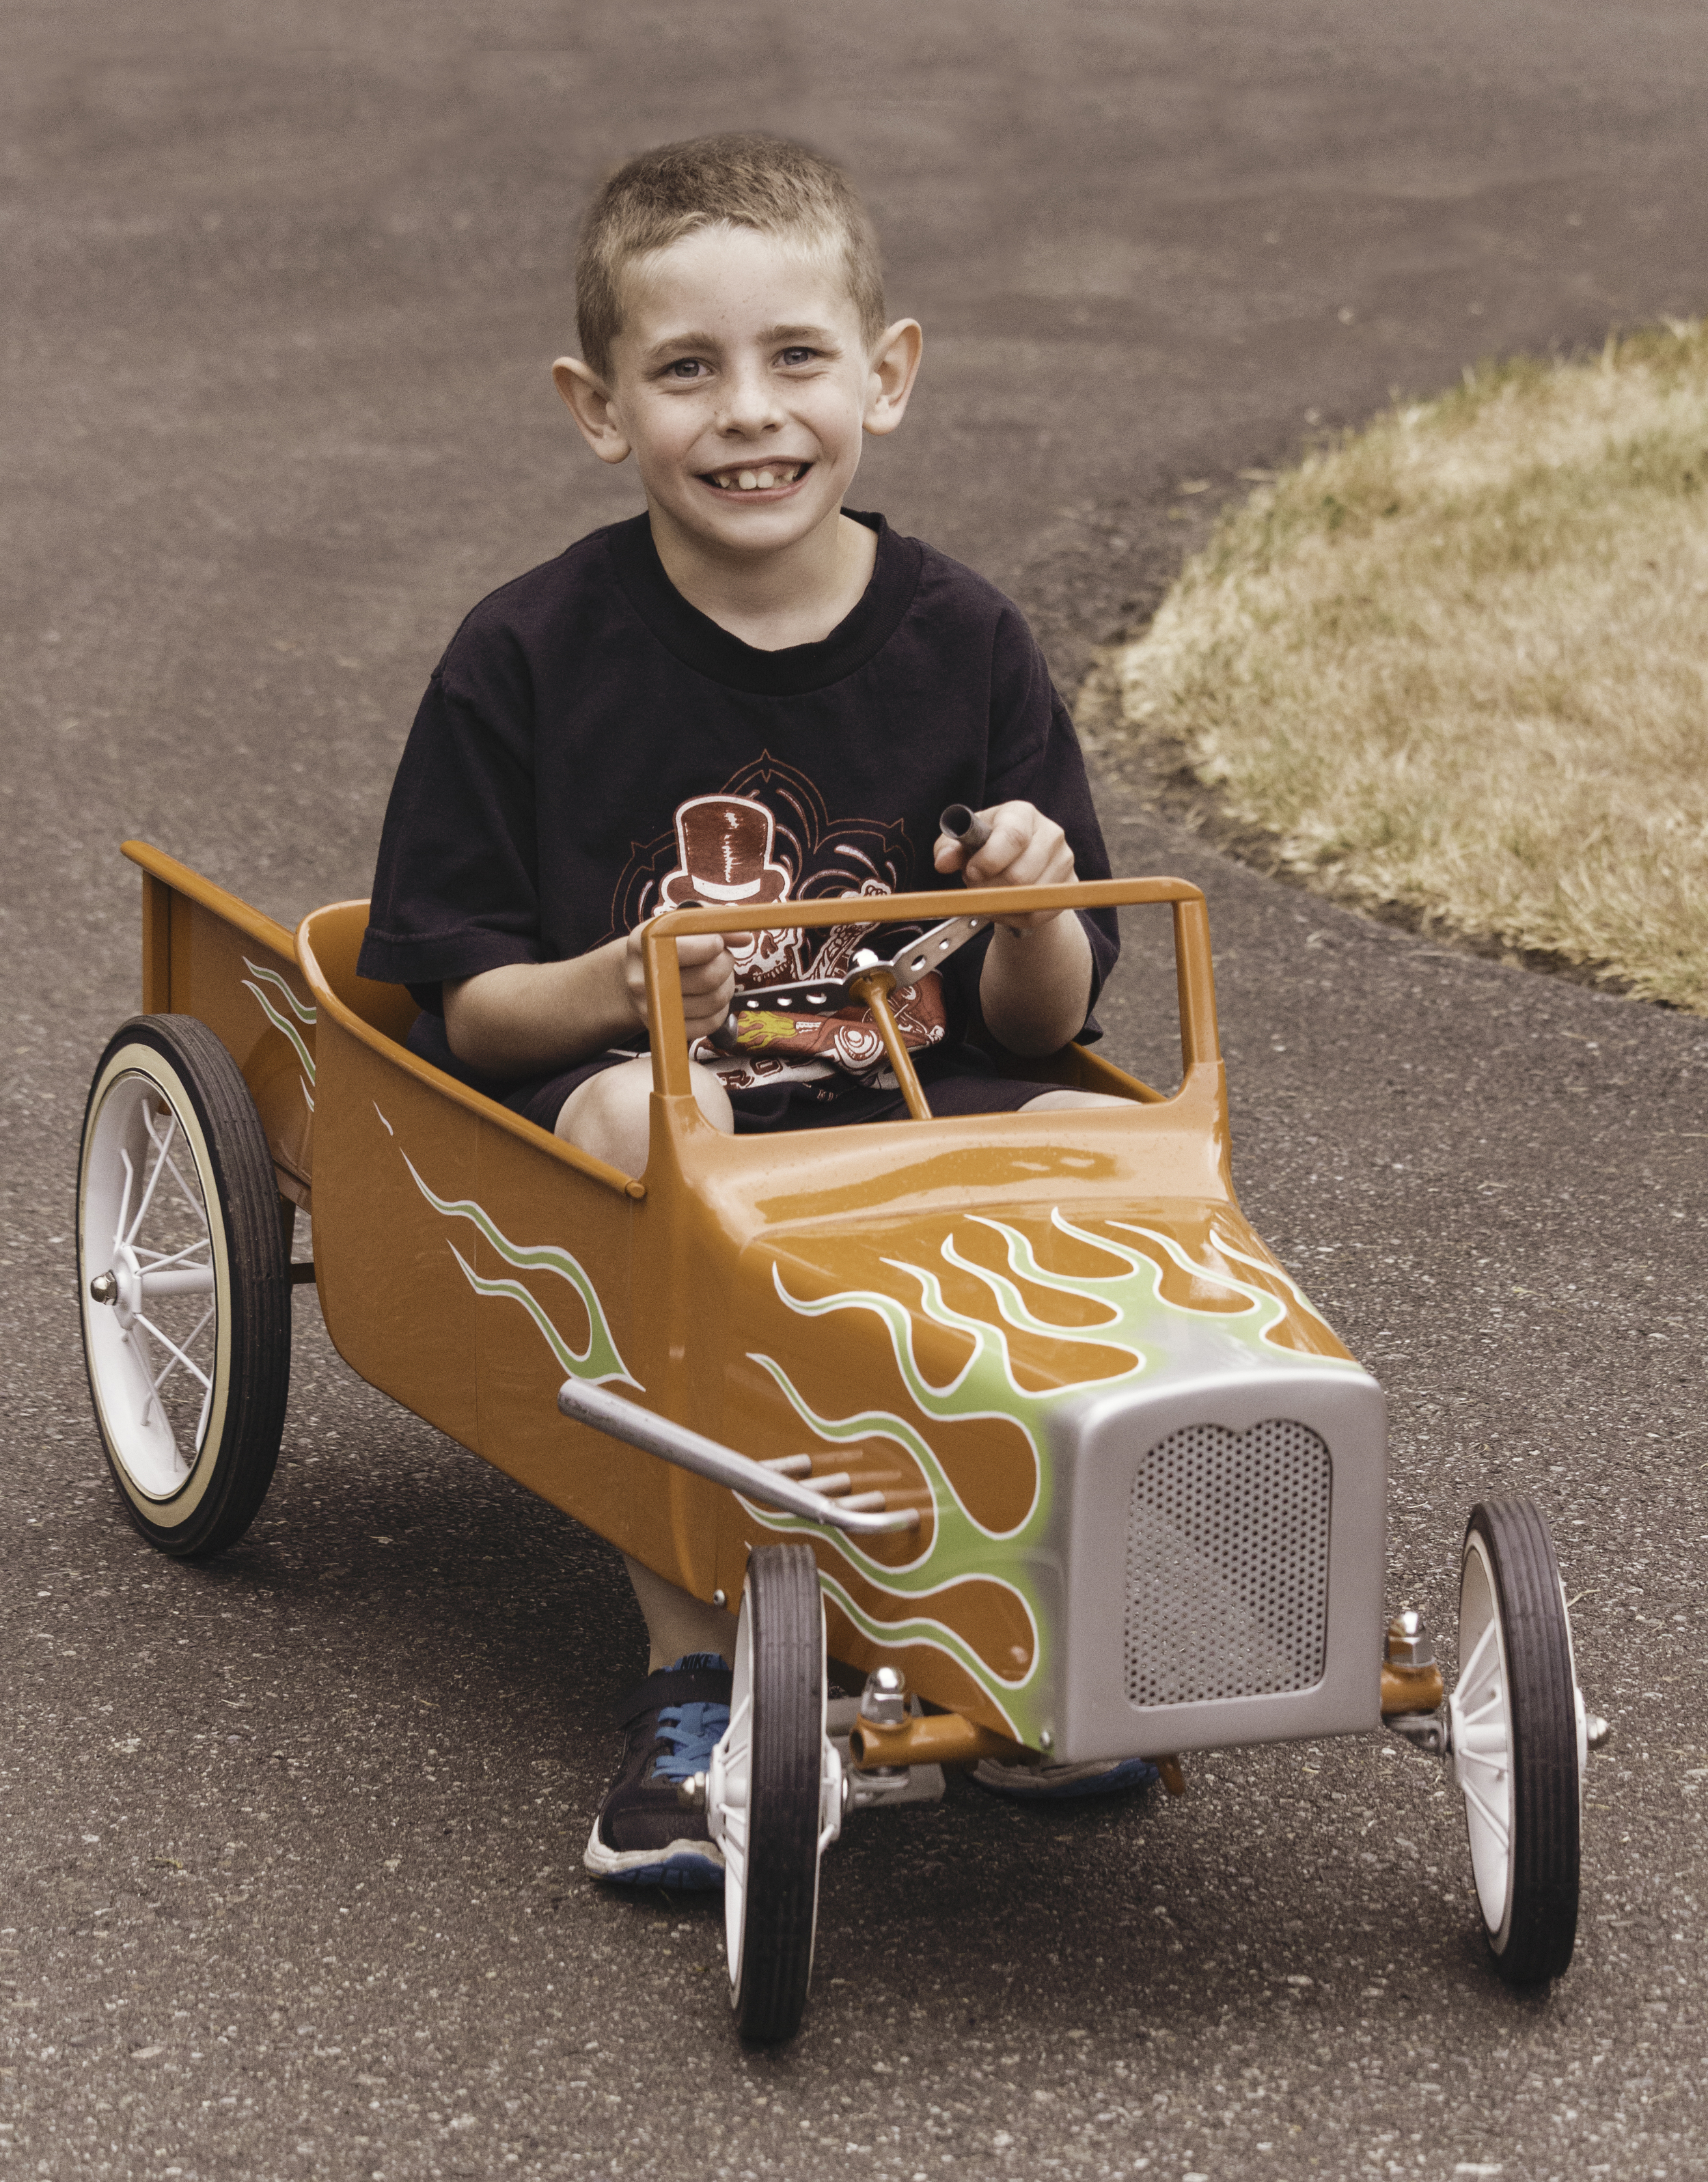 Kid in Peddle Car.jpg